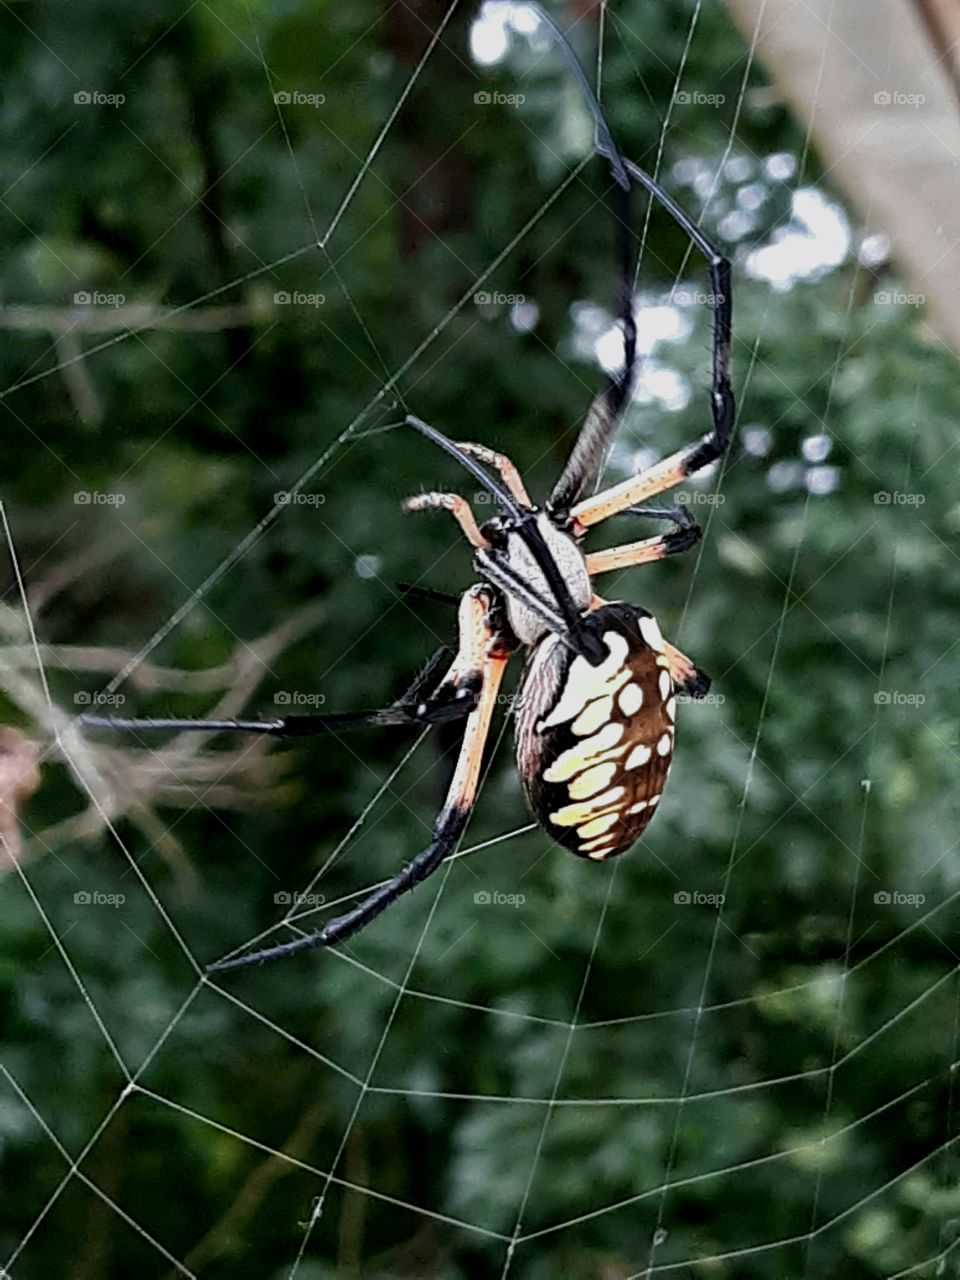 Big rare looking spider